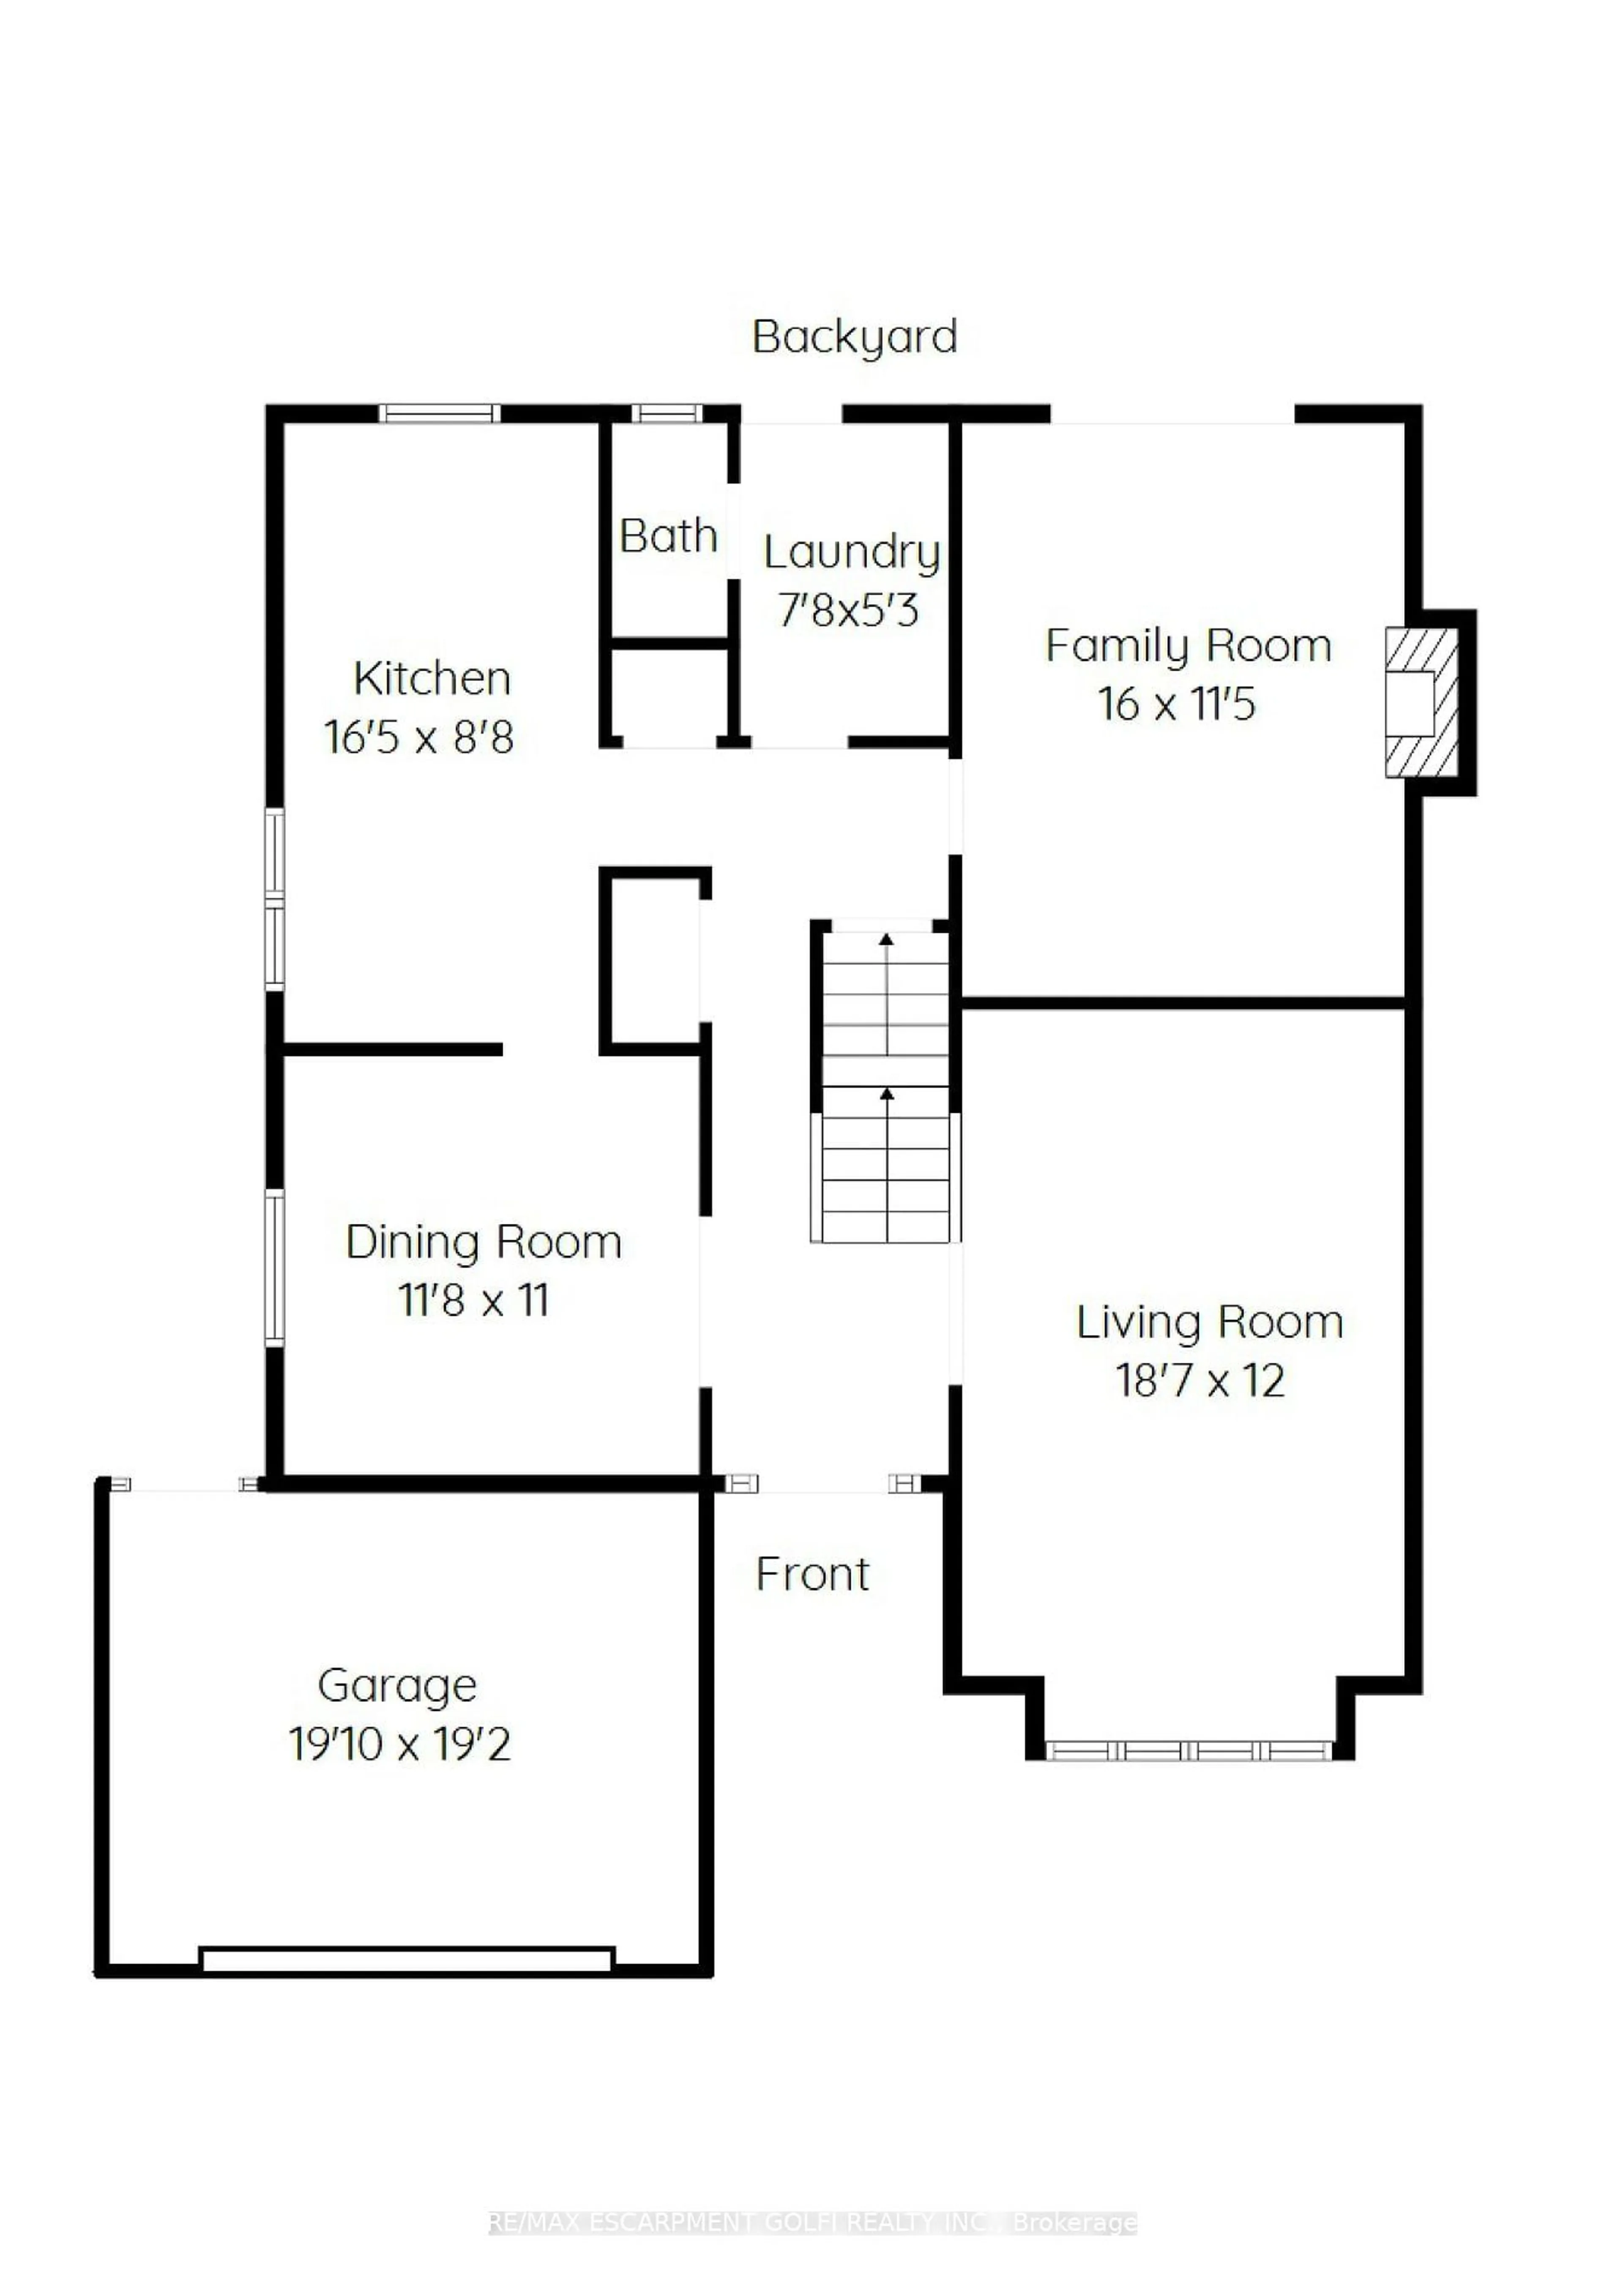 Floor plan for 31 Kimbermount Dr, St. Catharines Ontario L2N 6G3